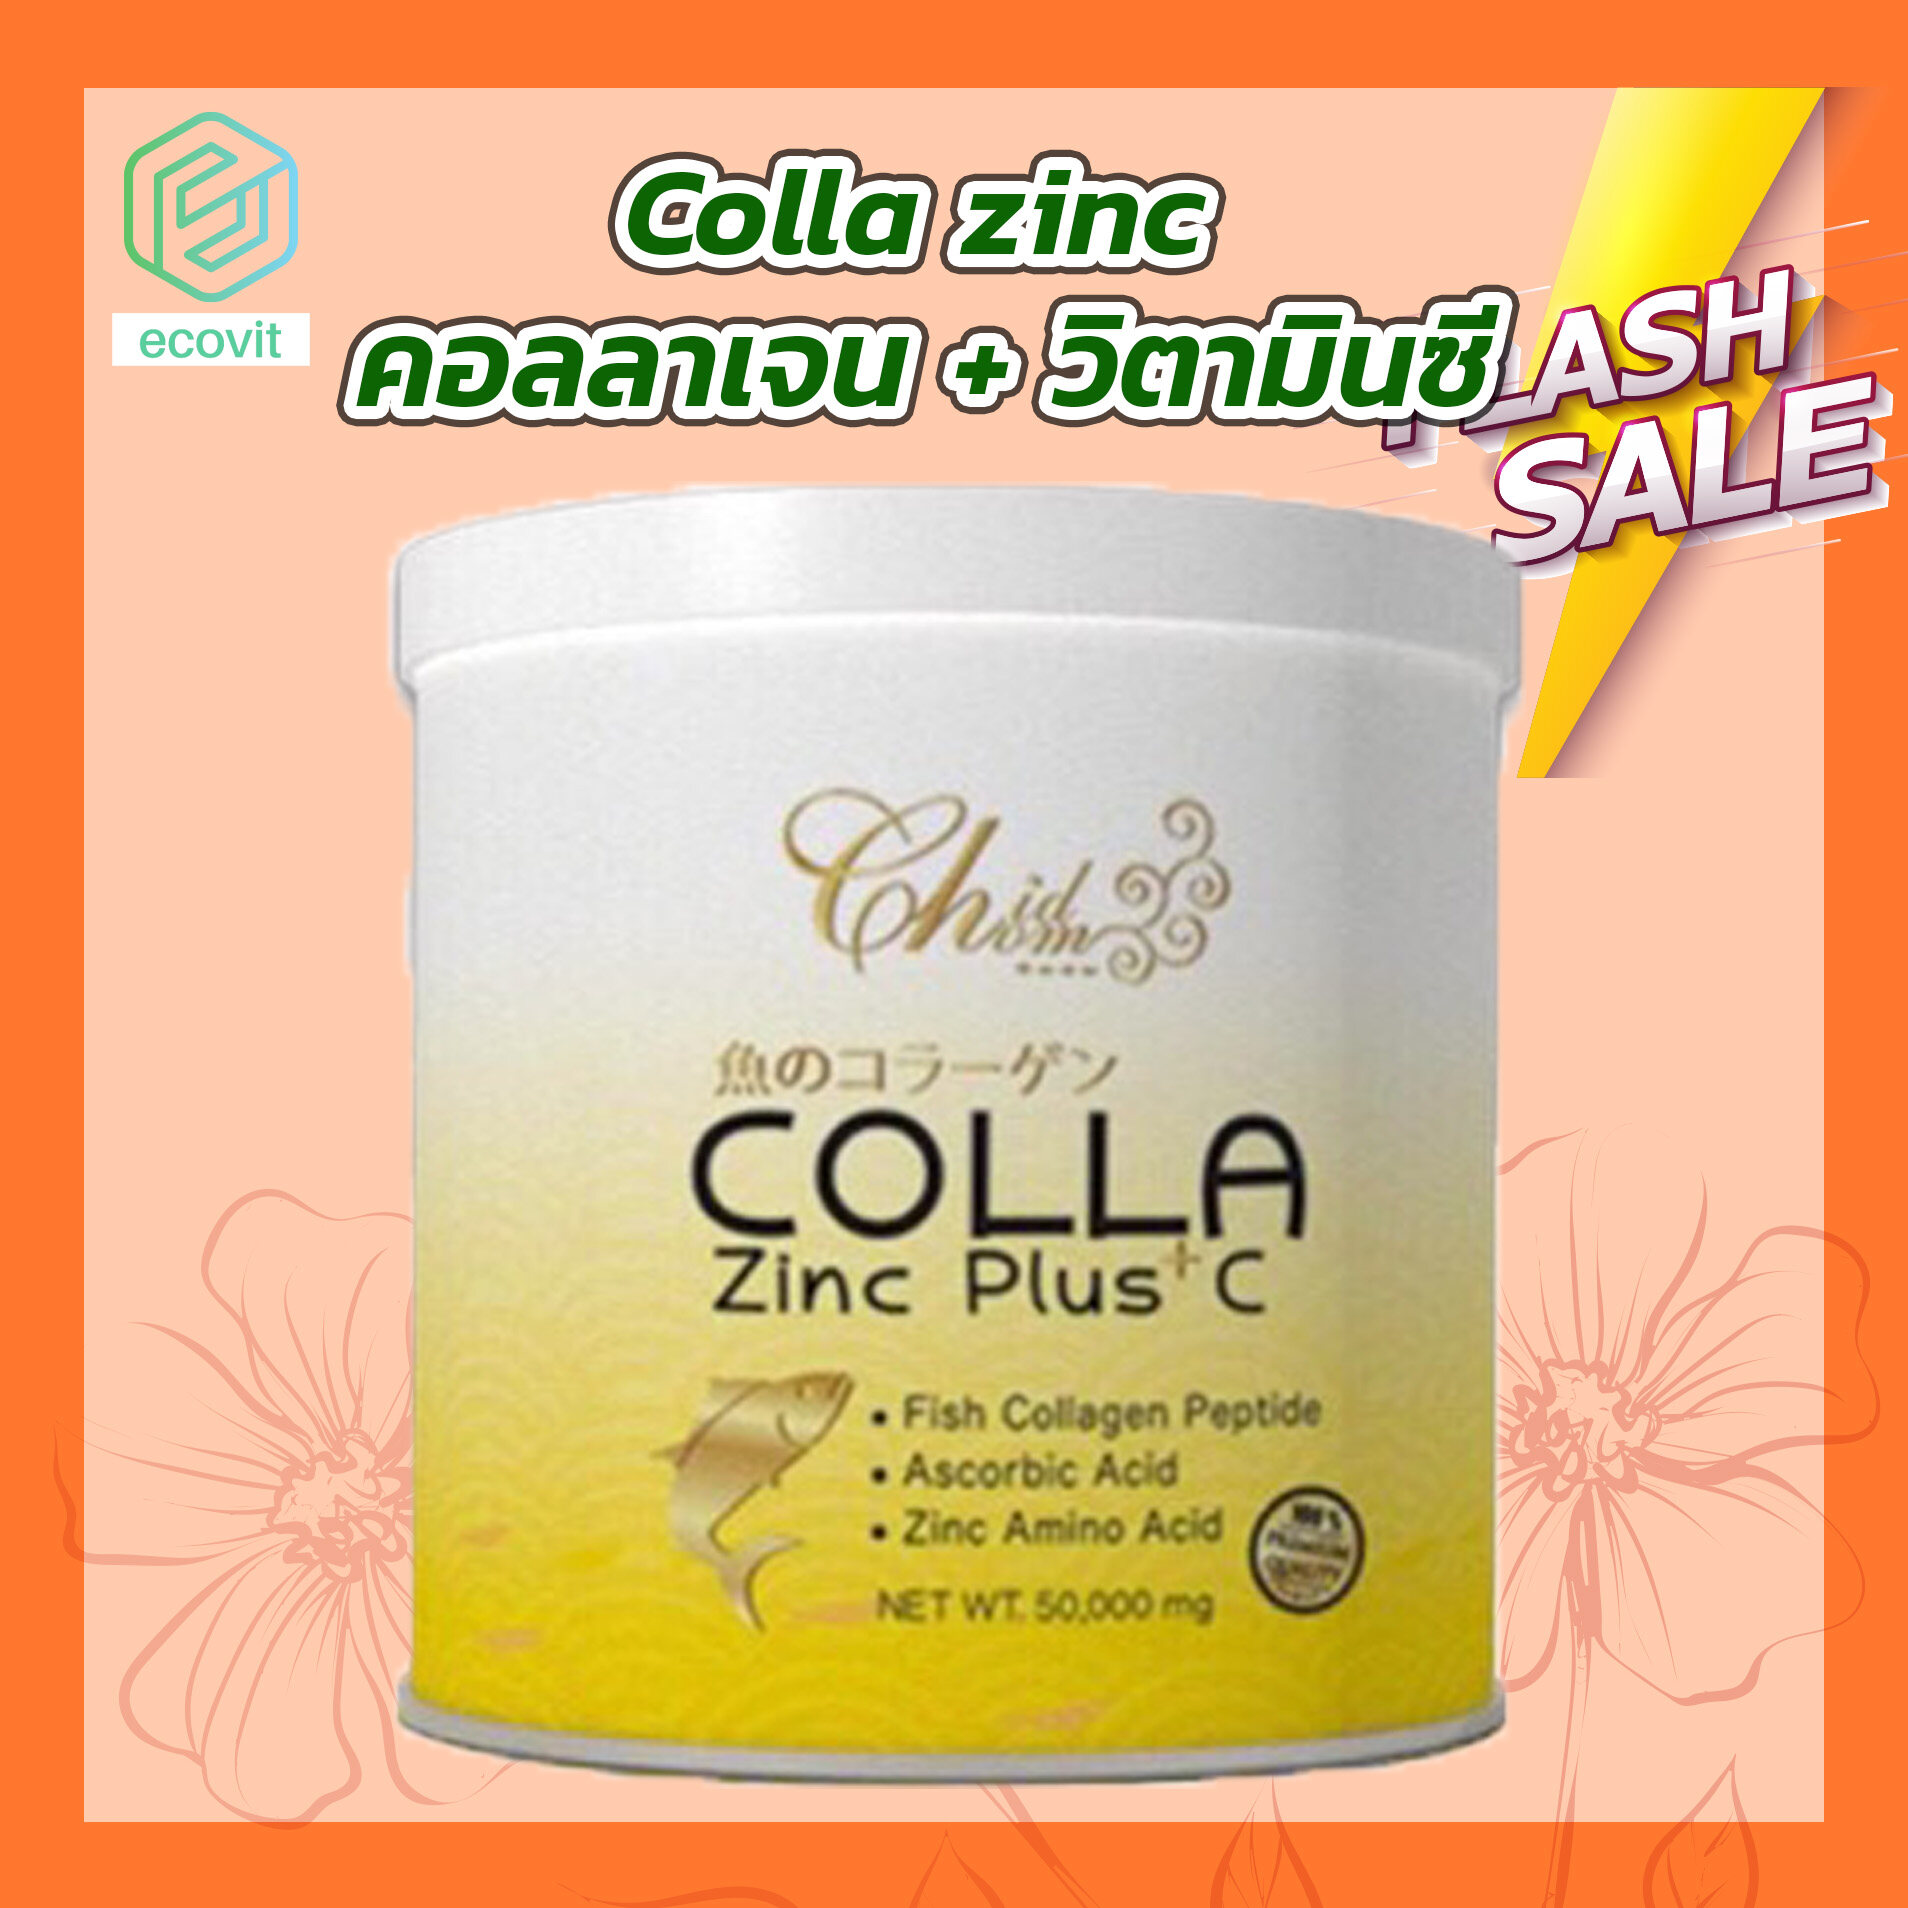 Colla Zinc Plus C อาหารเสริม คอลลาเจน พลัส วิตามินซี [50 กรัม][1 กระปุก]  วิตามินซี   อาหารเสริม คอลลาเจนcollagen คอลลาเจนกระดูก by Ecovit